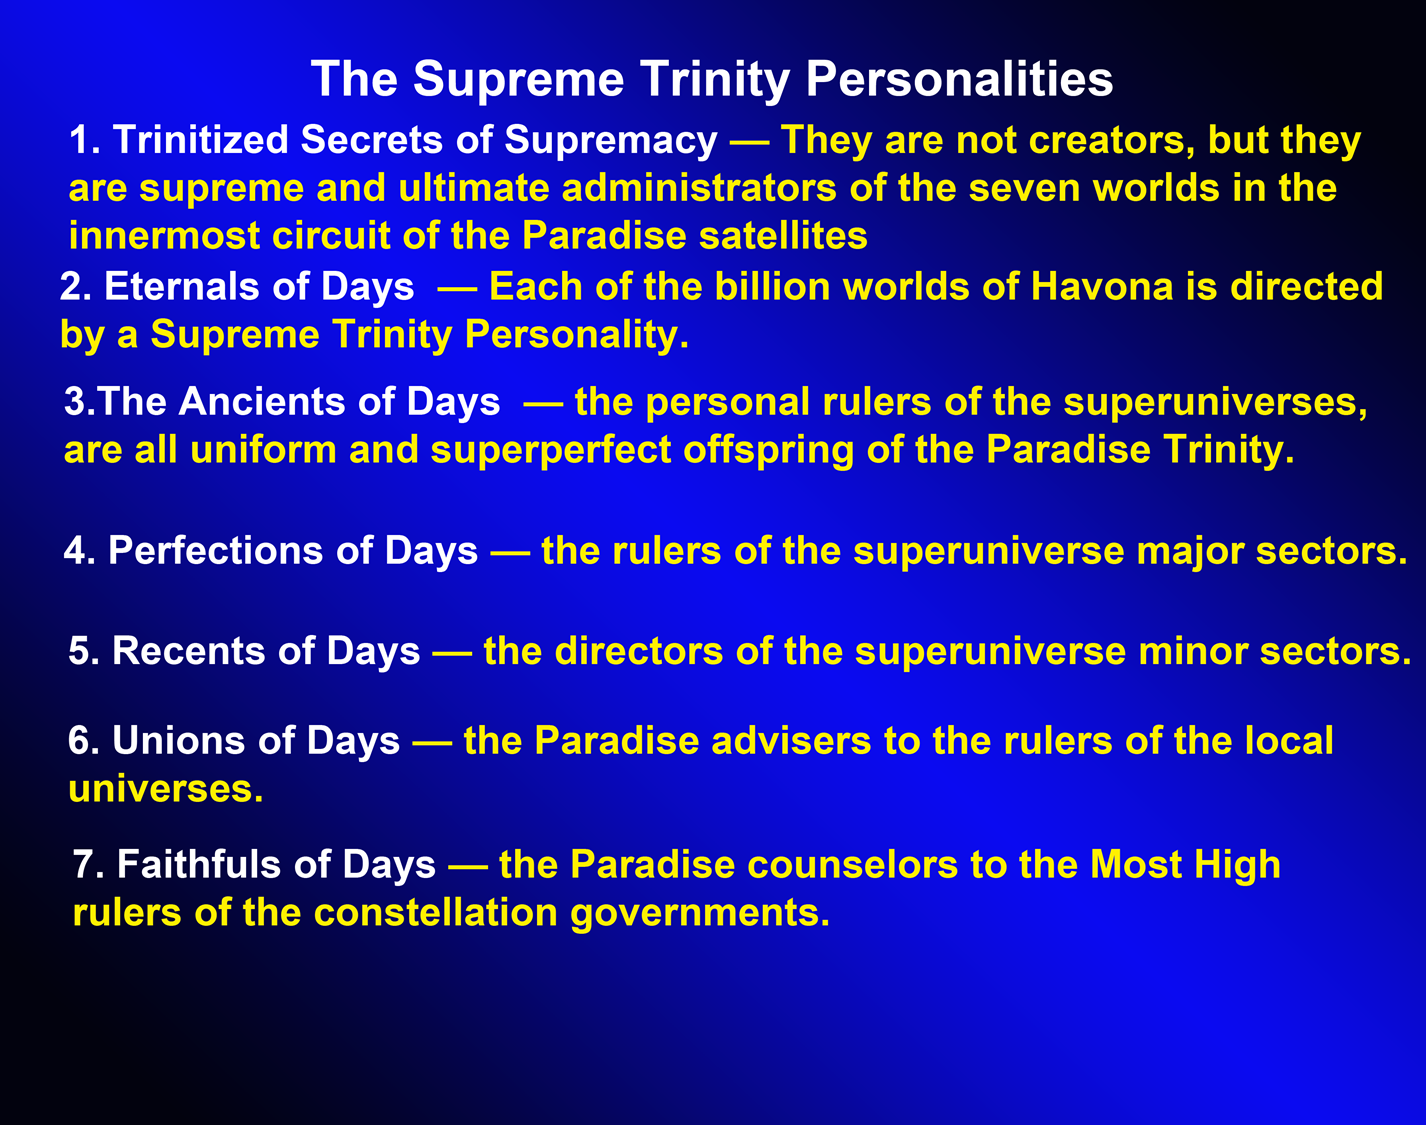 The Supreme trinity personalities